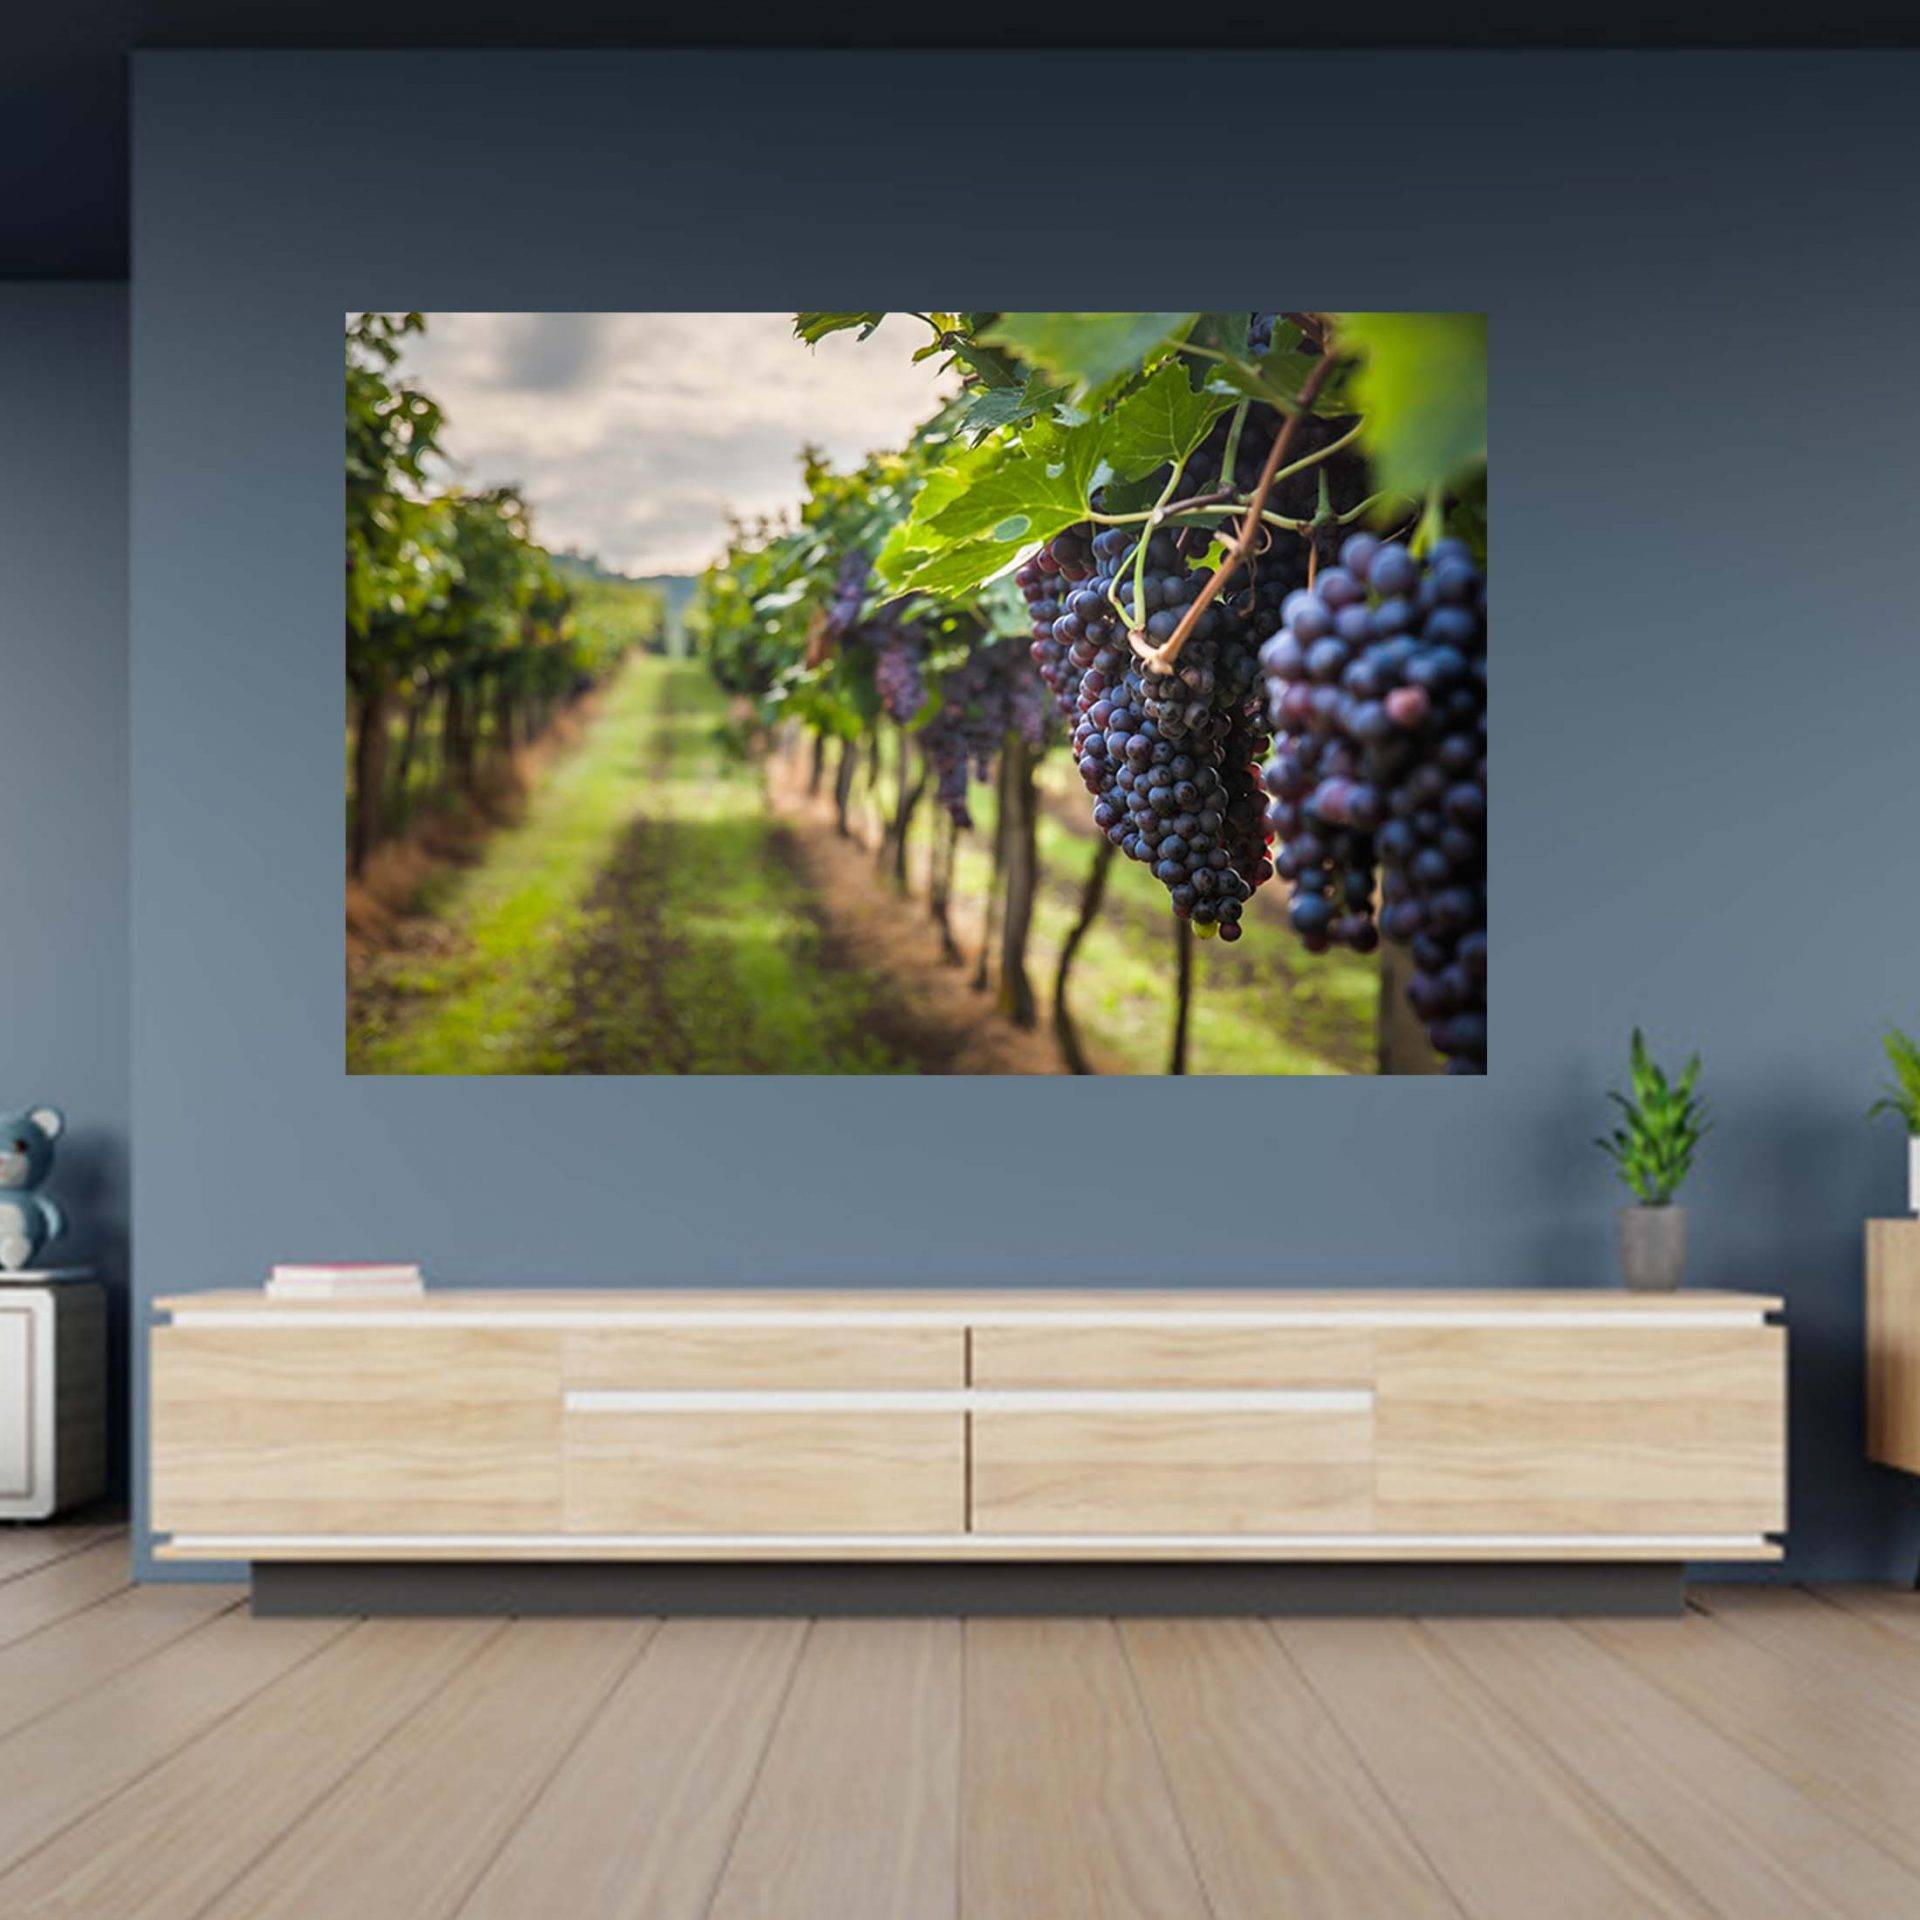 Grapes Vineyard Wall Sticker - Wall Decal Art Mural - Blue Side Studio